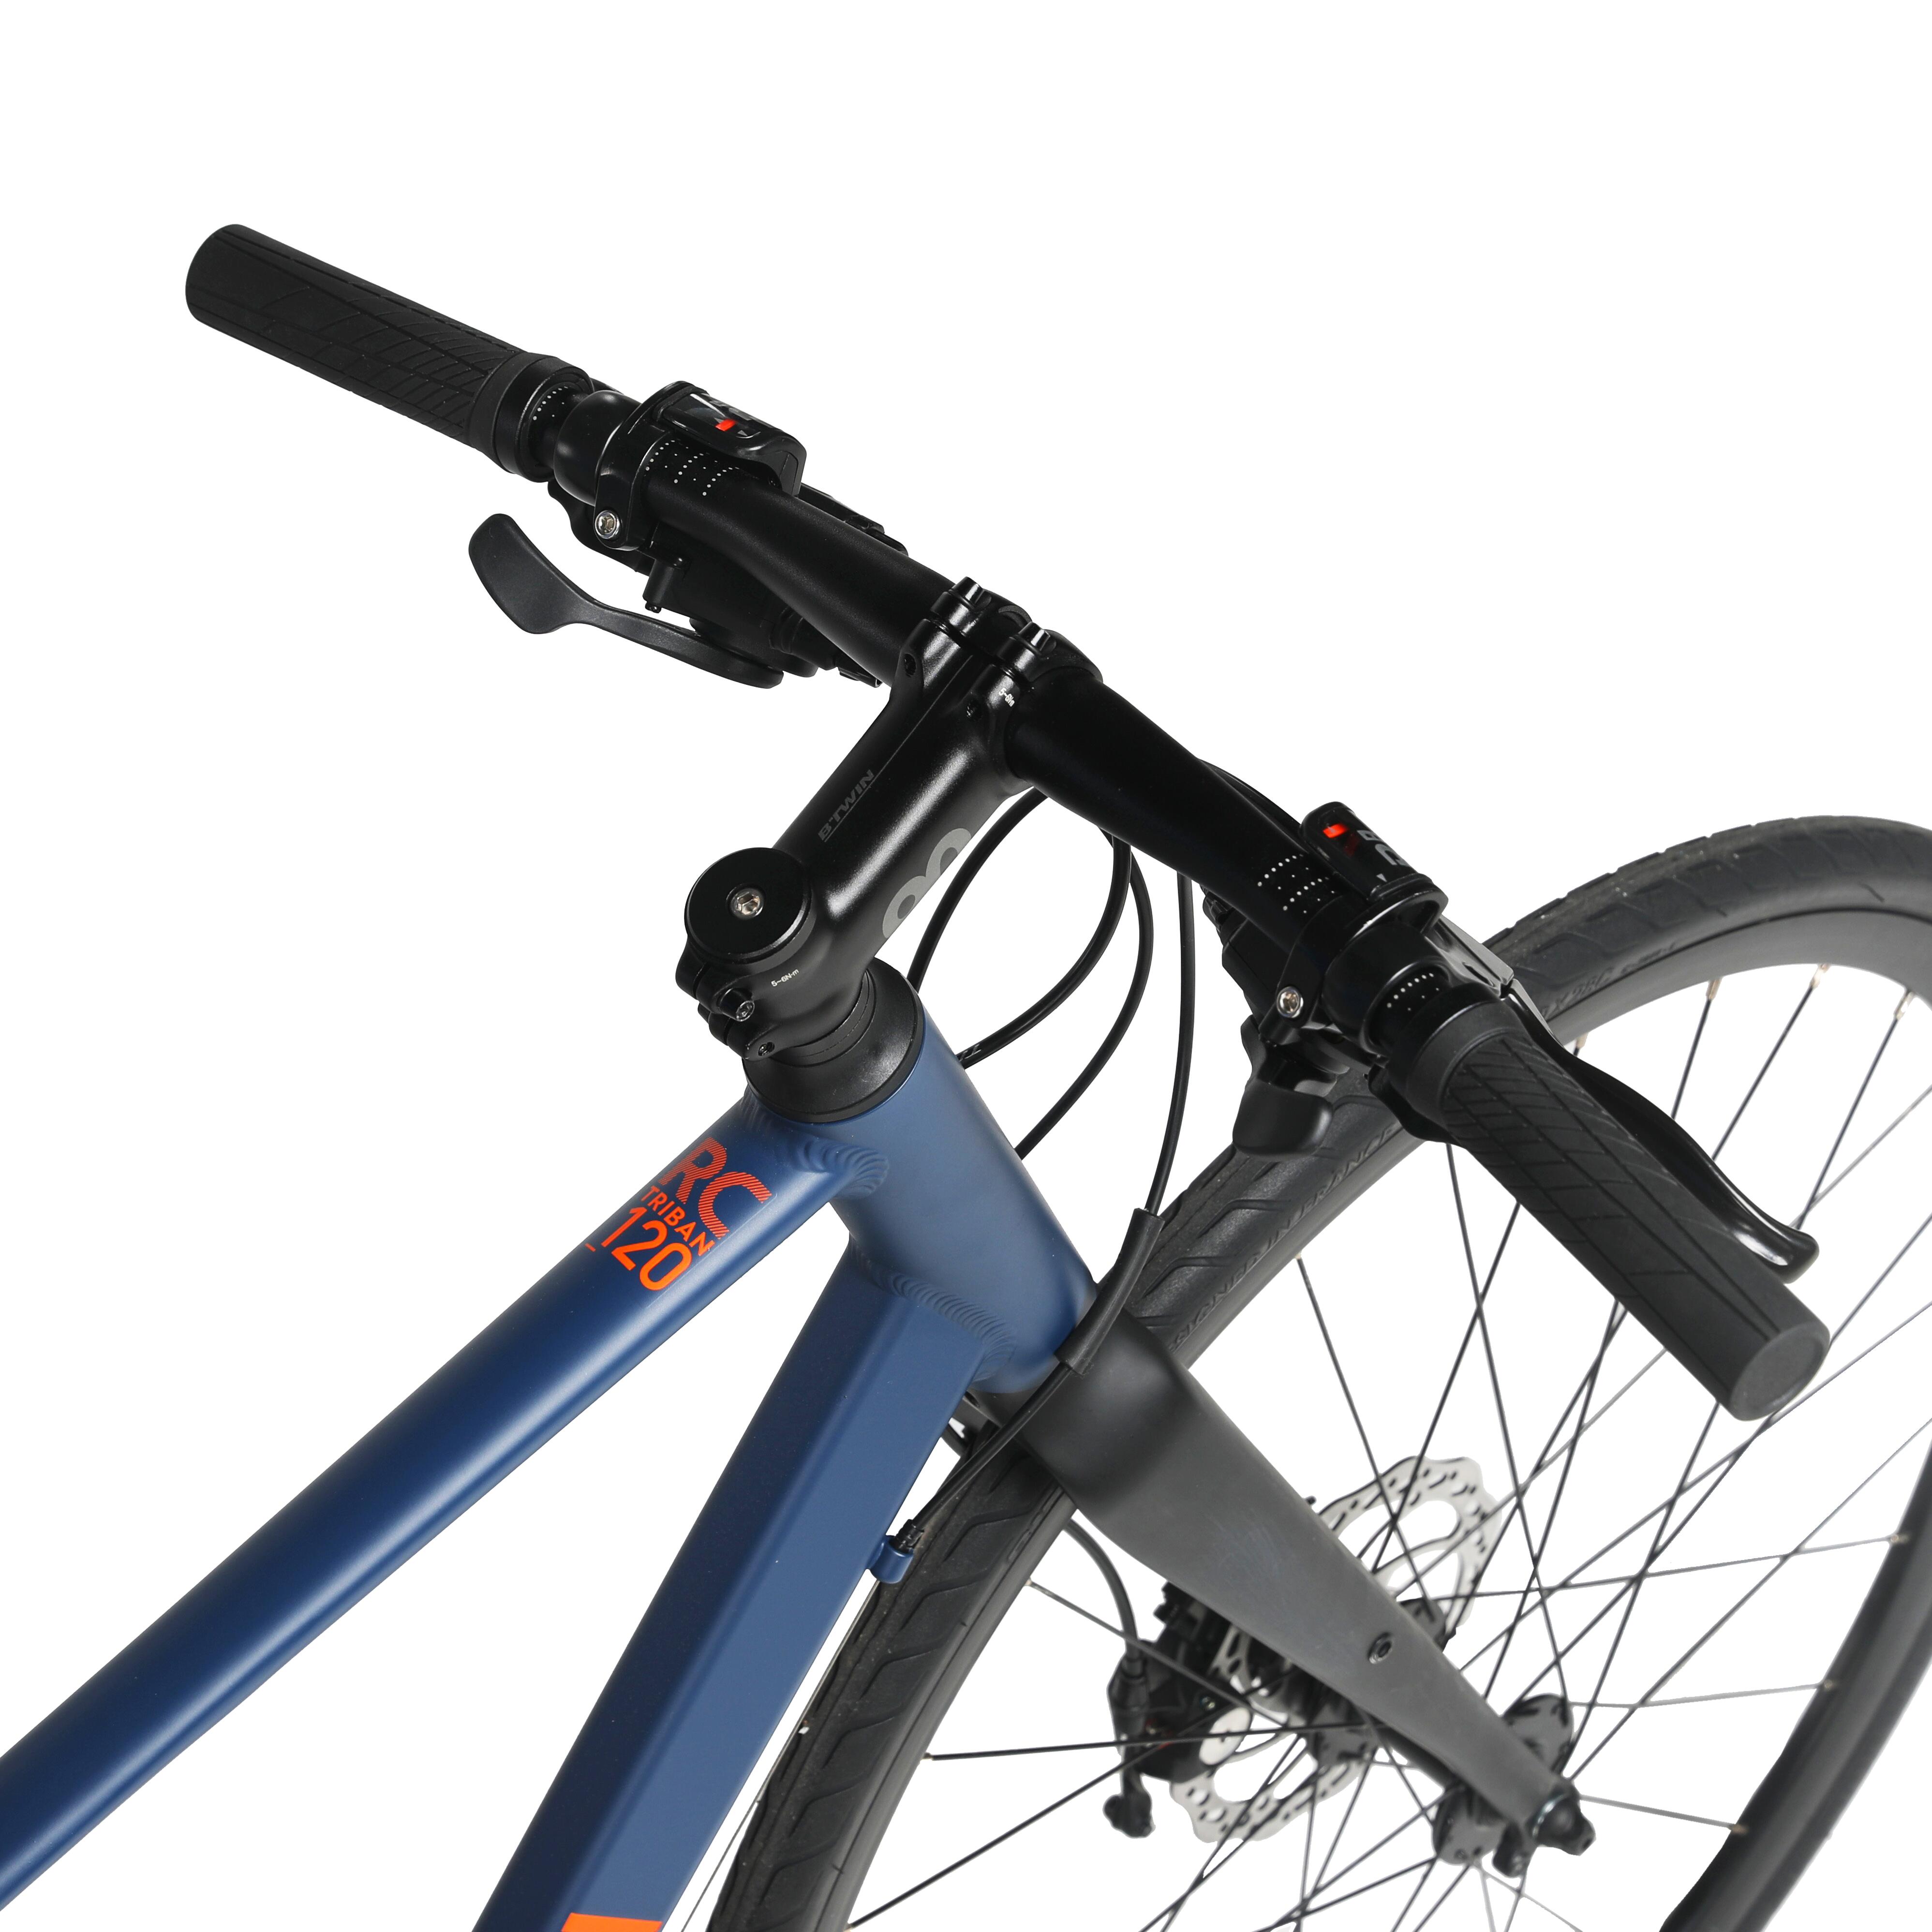 Flat Bar Road Bike - RC 120 FB Blue/Orange - TRIBAN